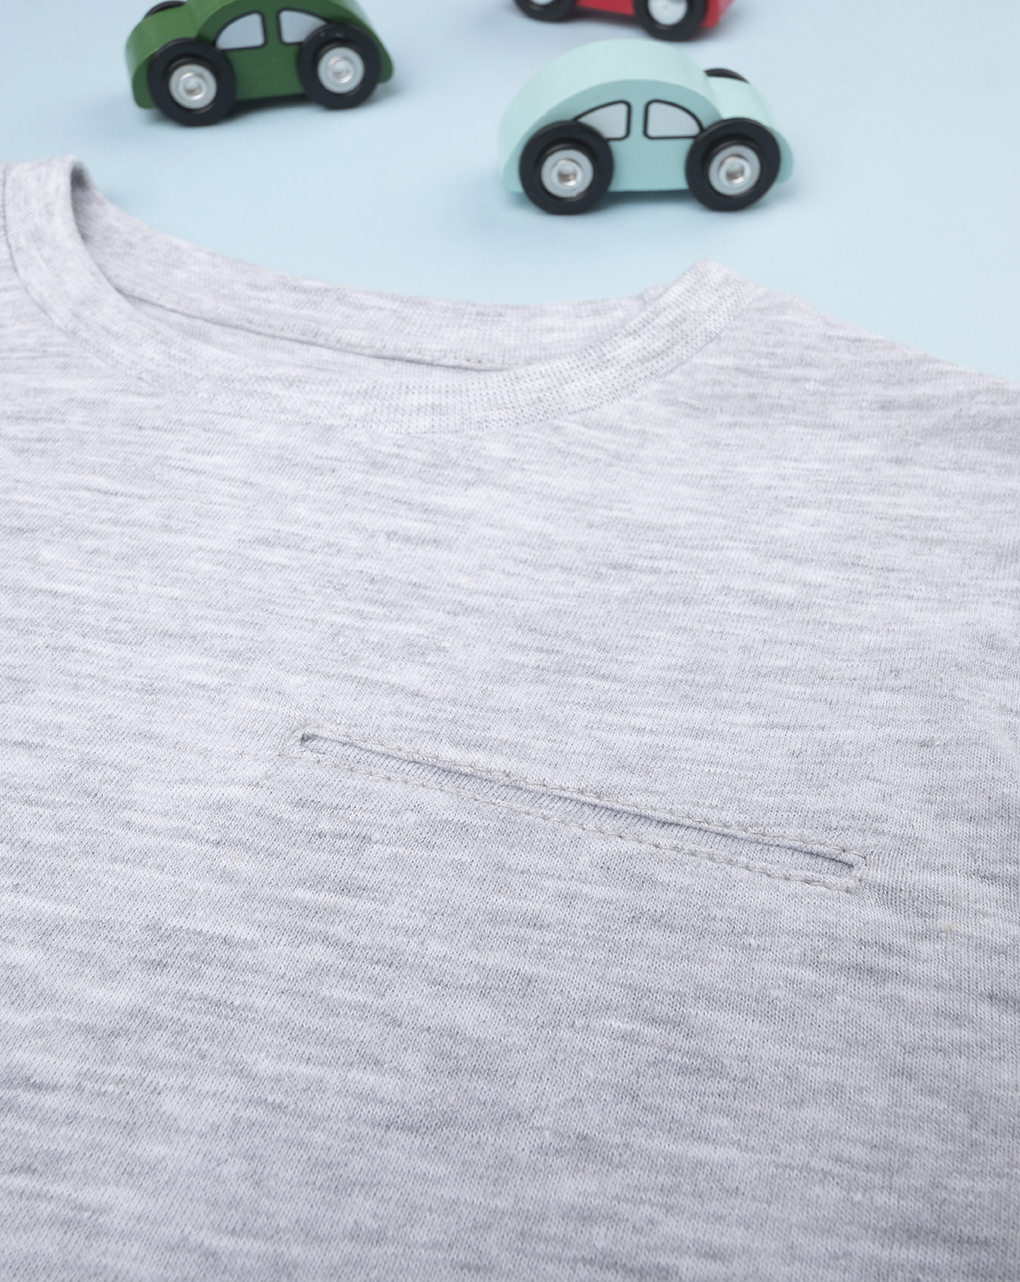 T-shirt boy gray - Prénatal